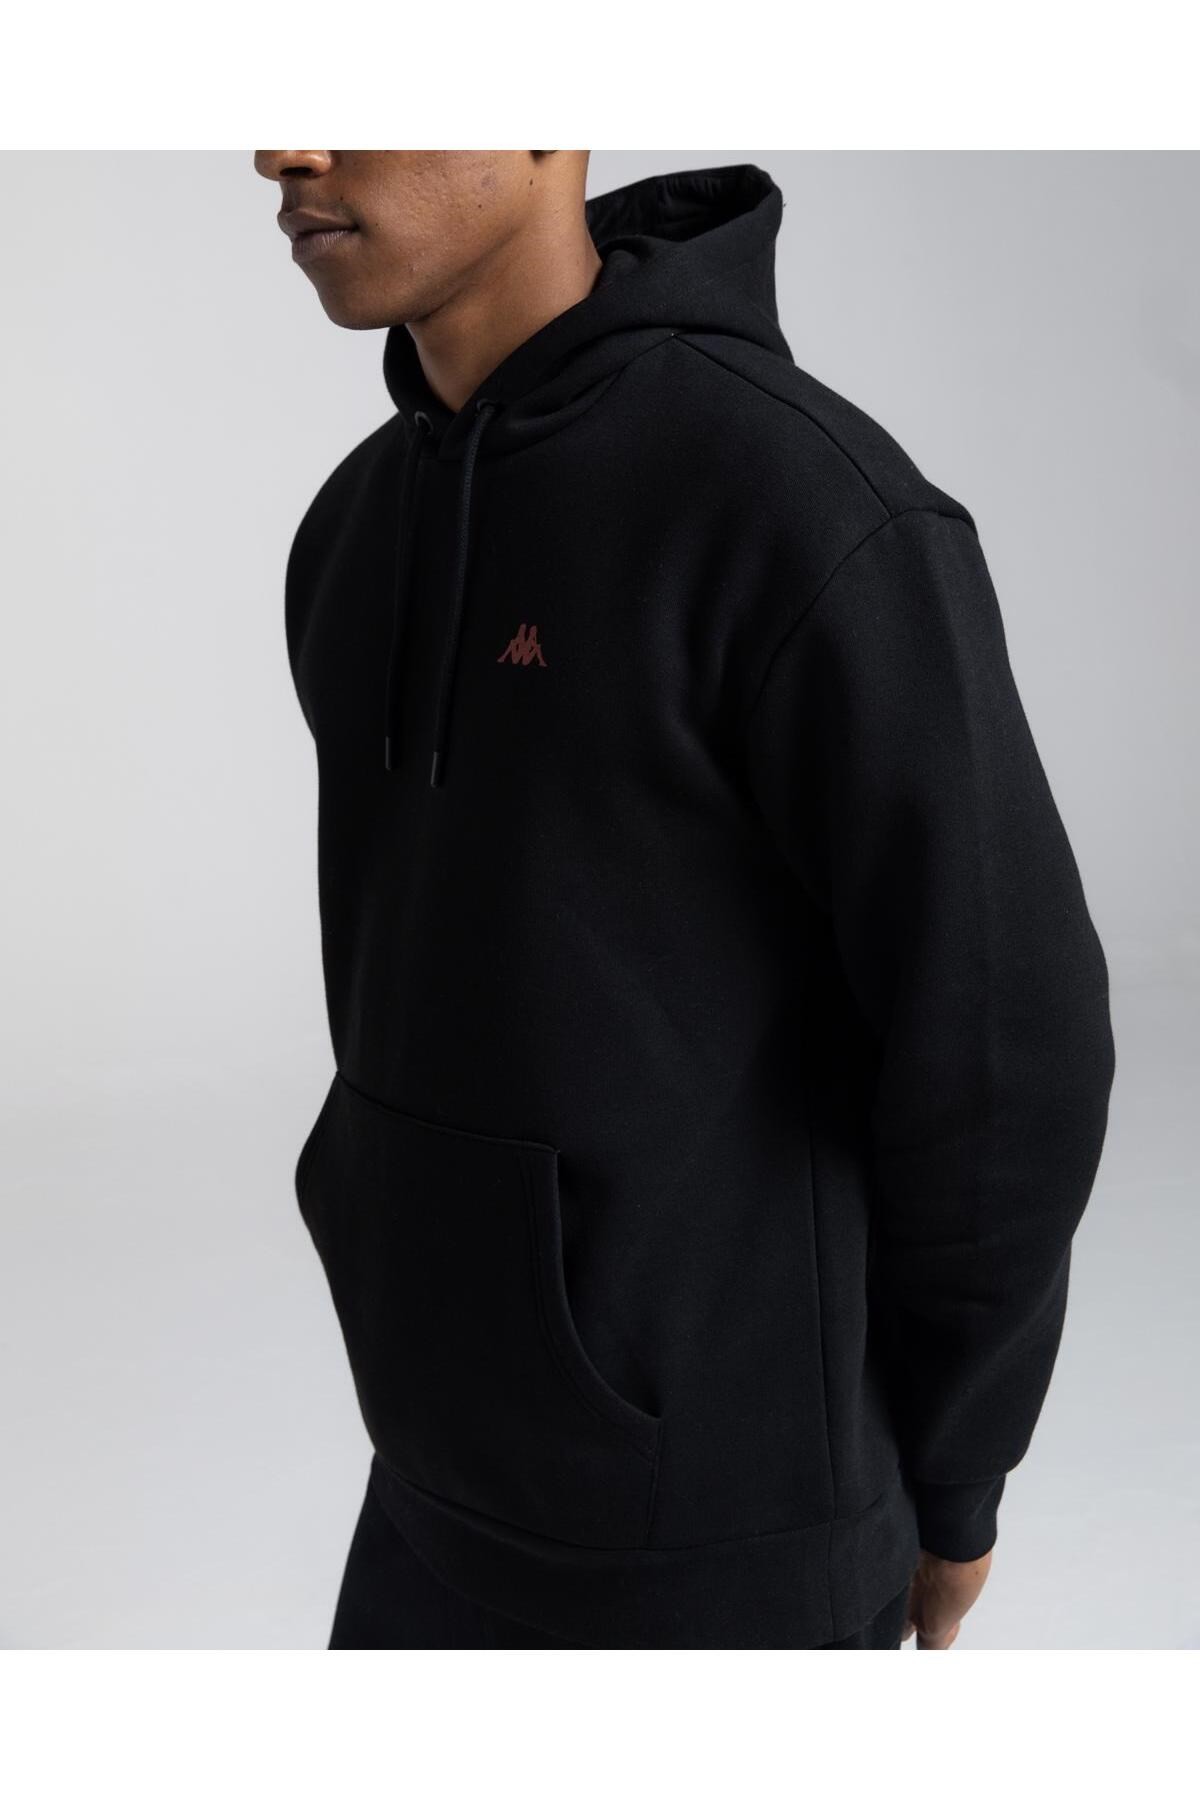 Kappa Authentic Fuji Erkek Siyah Sweatshirt 321T1GW005